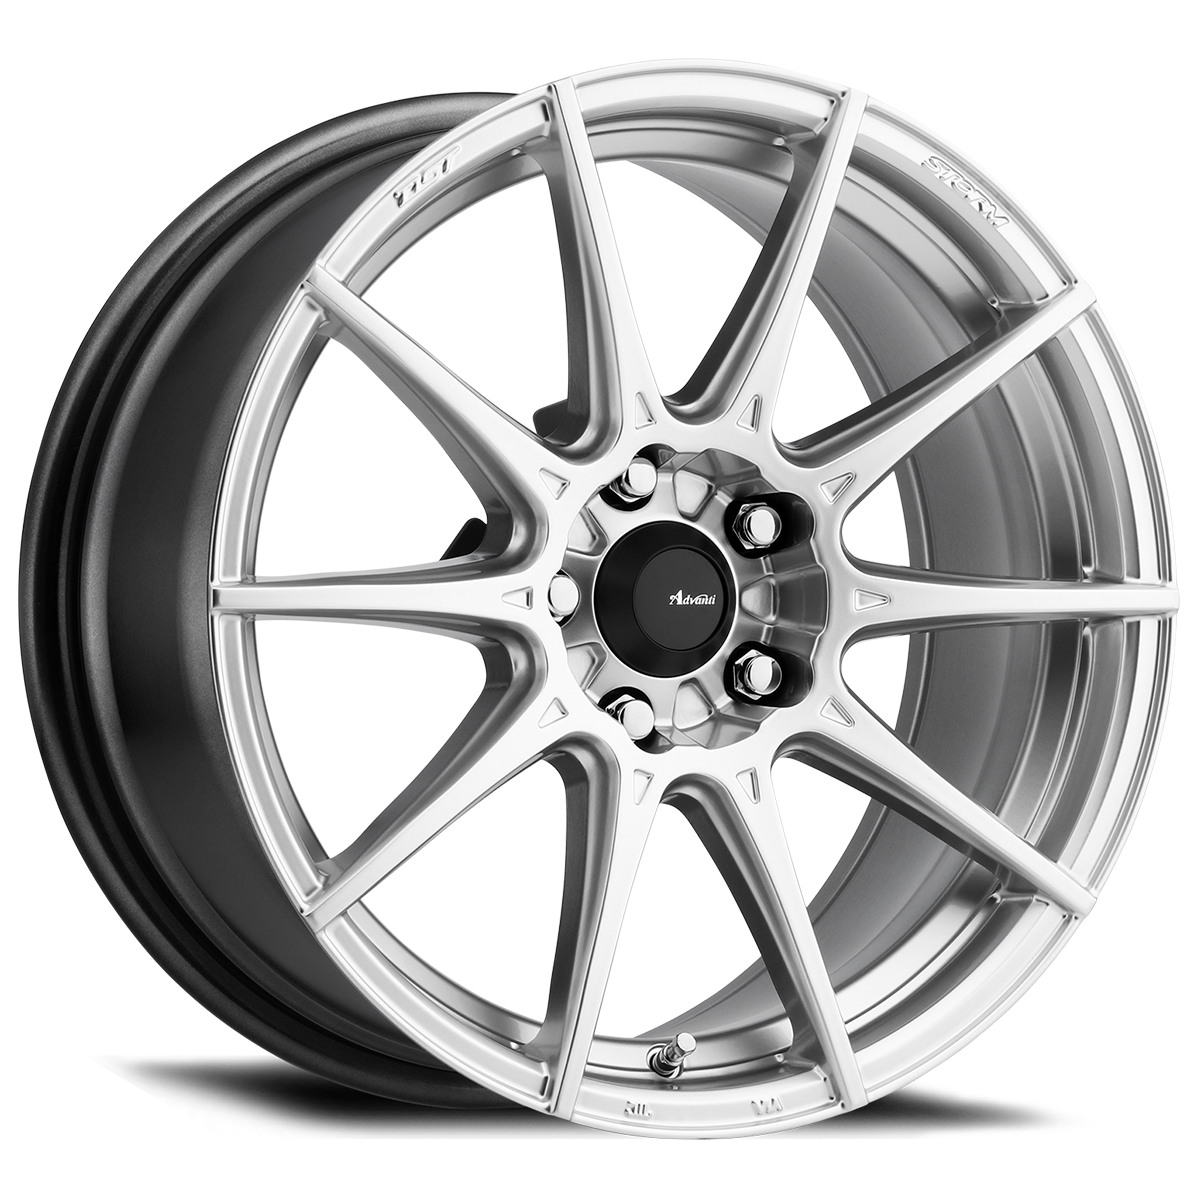 17” Advanti 5x108 Alloy wheels and tires 205/50 17 set of 4 - Car